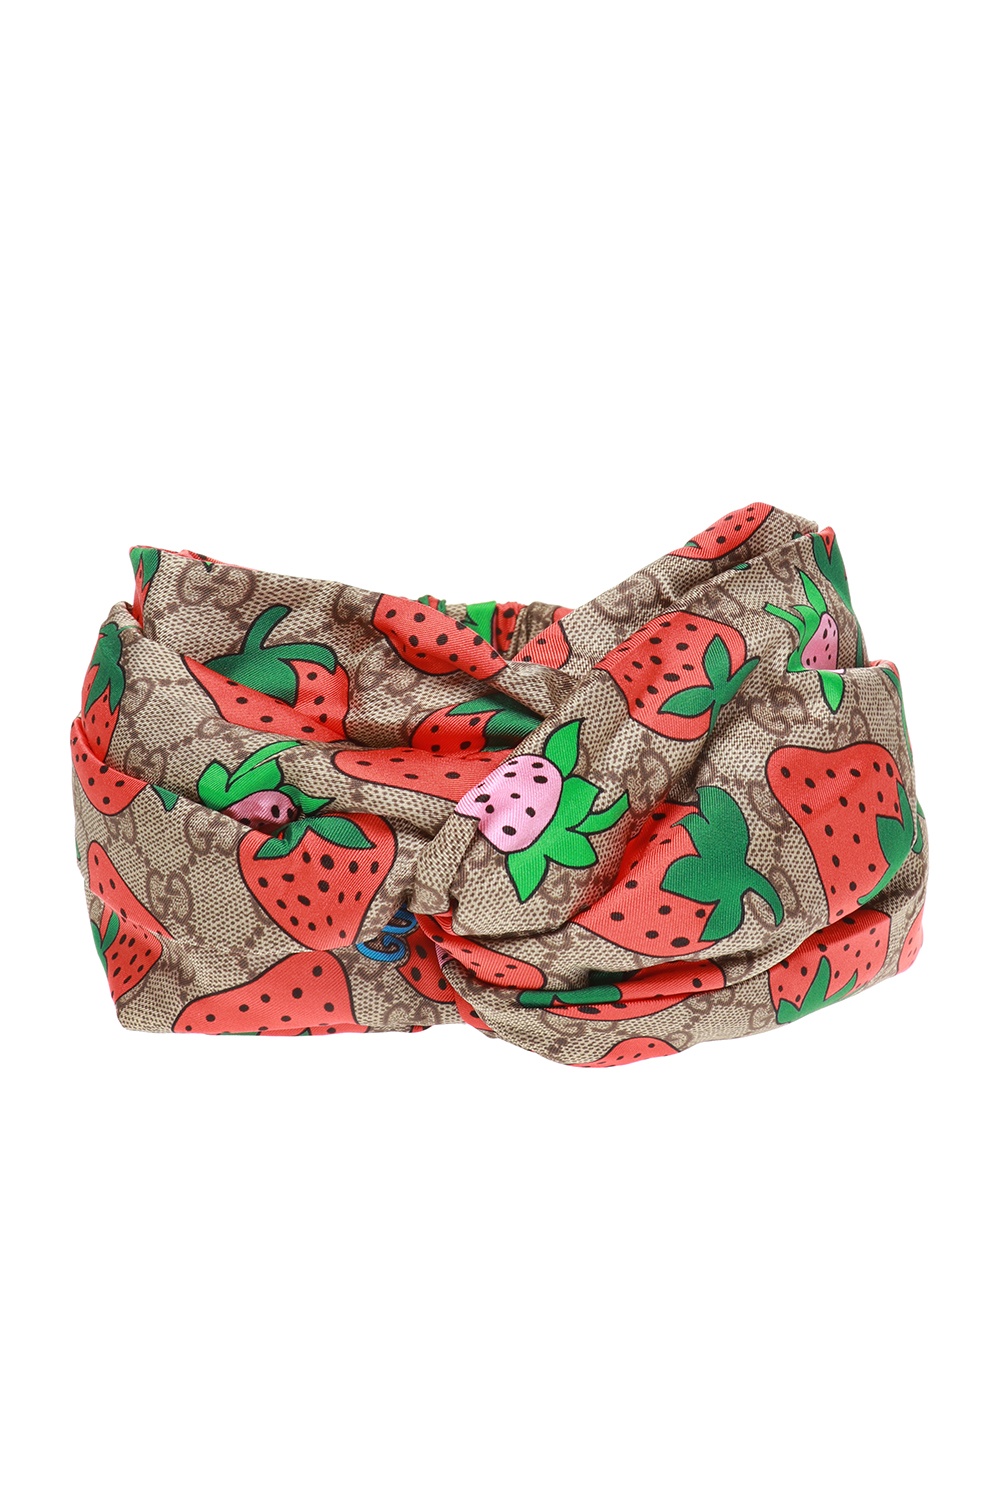 strawberry gucci headband